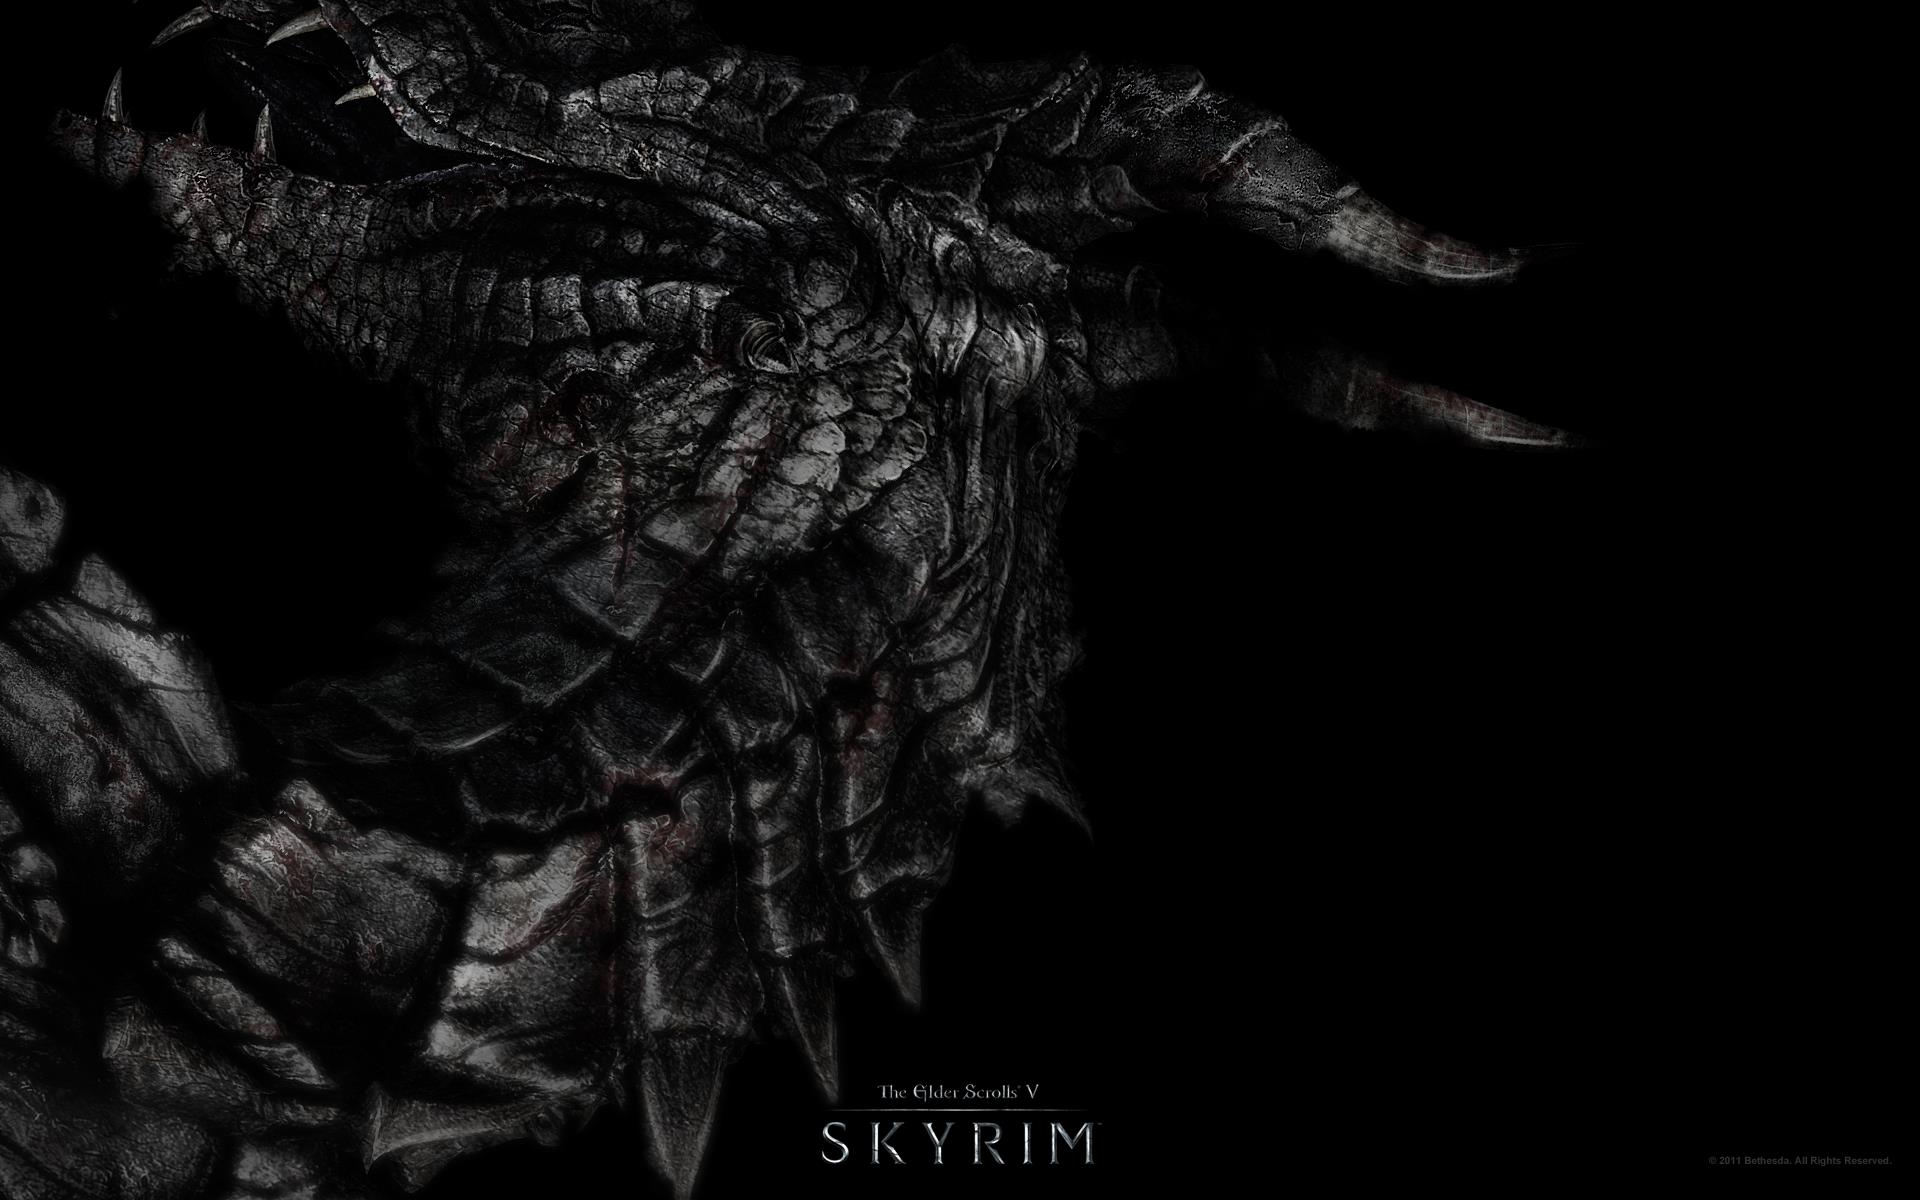 The Elder Scrolls V: Skyrim wallpaper dragon head